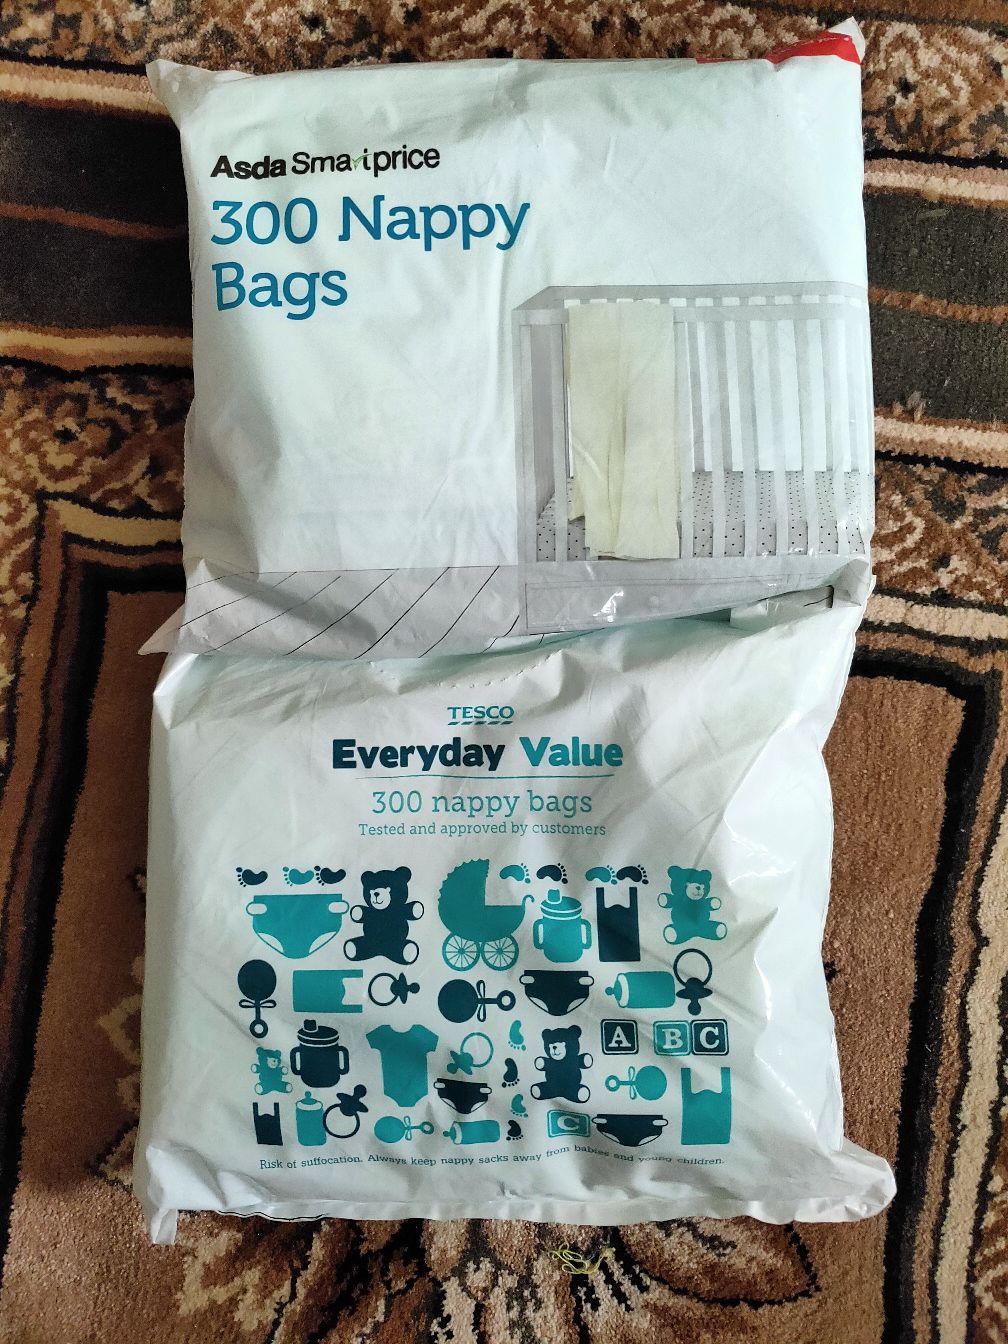 asda smart price nappies